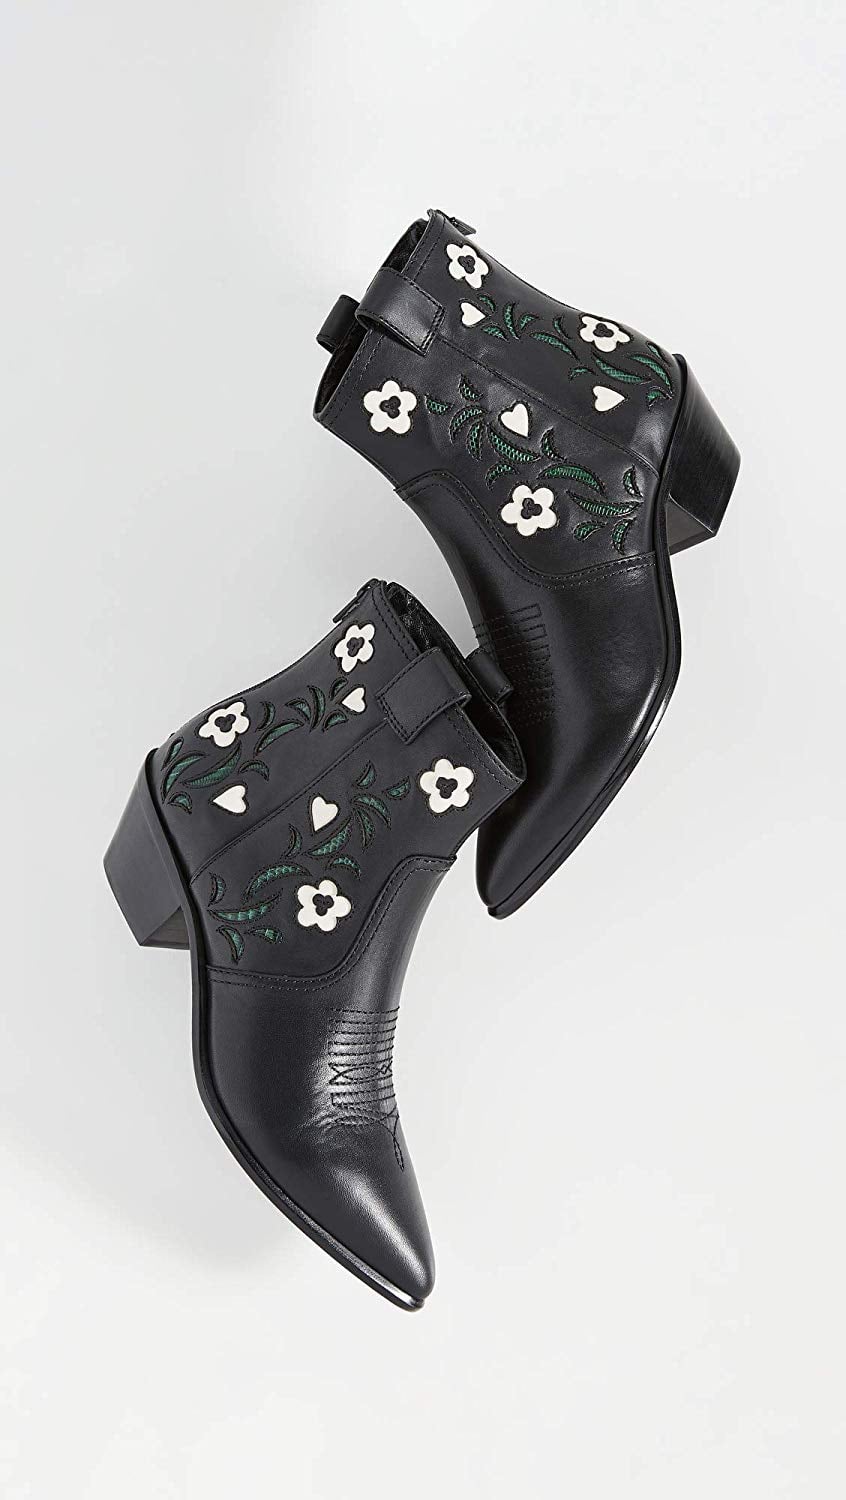 Stylish Boots For Women on Amazon 